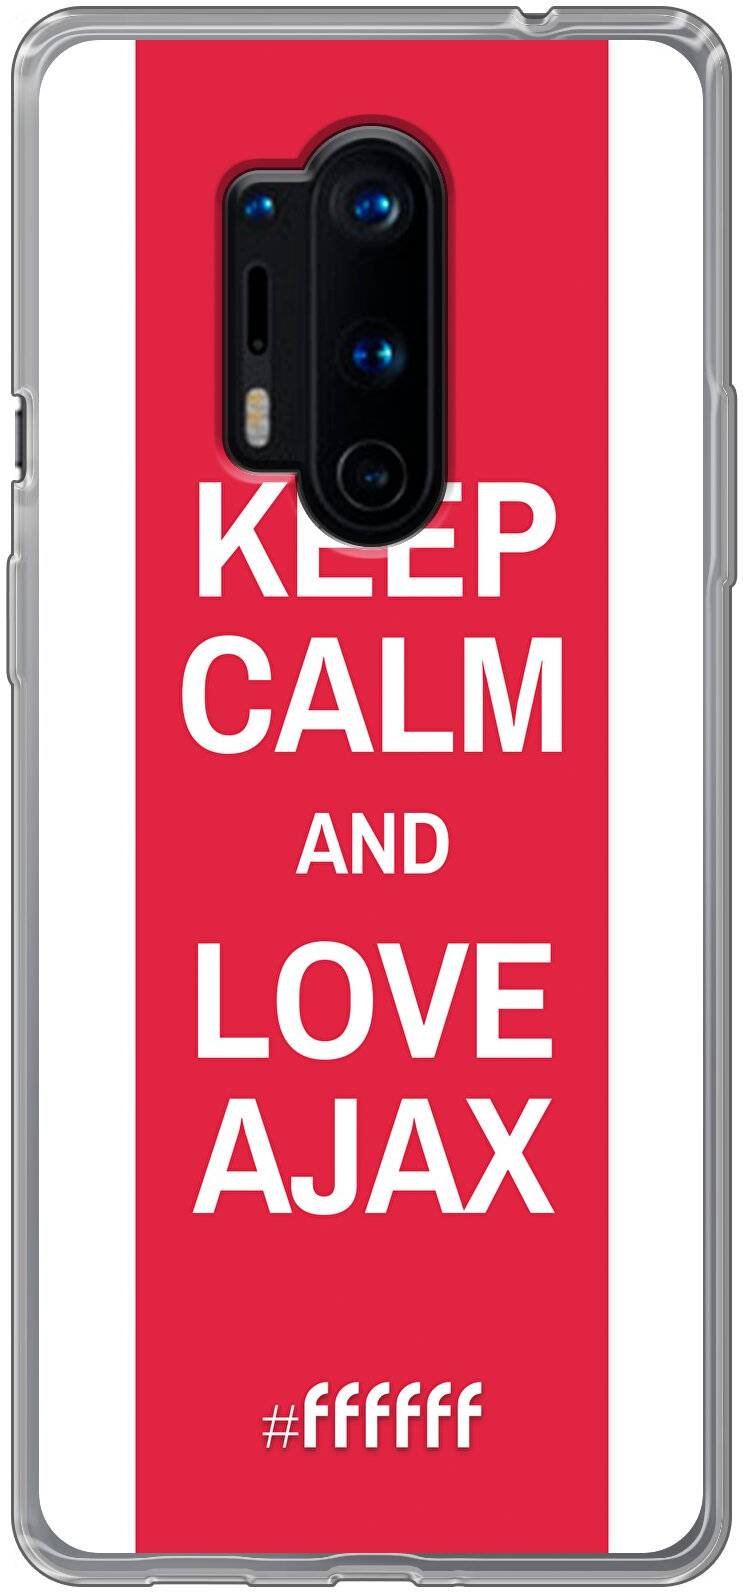 AFC Ajax Keep Calm 8 Pro